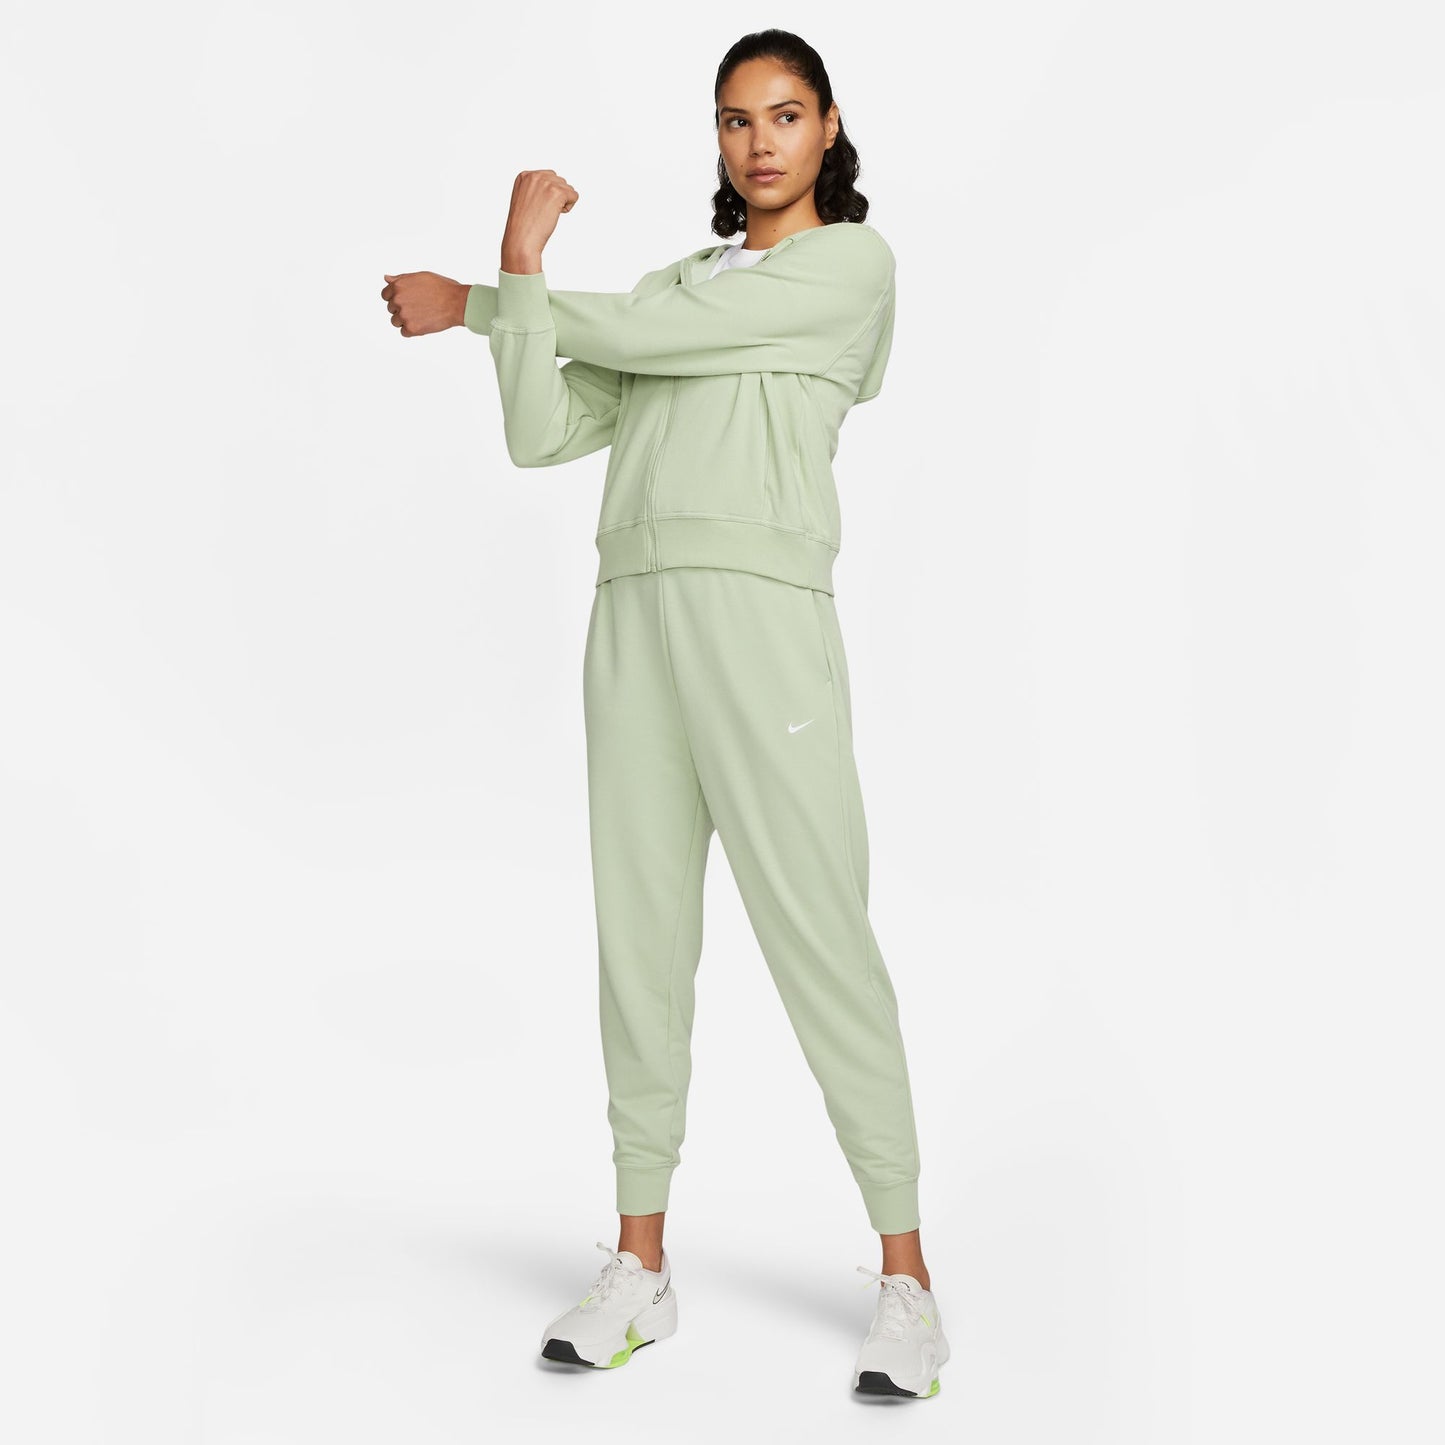 Nike Dri-FIT 7/8 French Terry joggingbroek met hoge taille voor dames